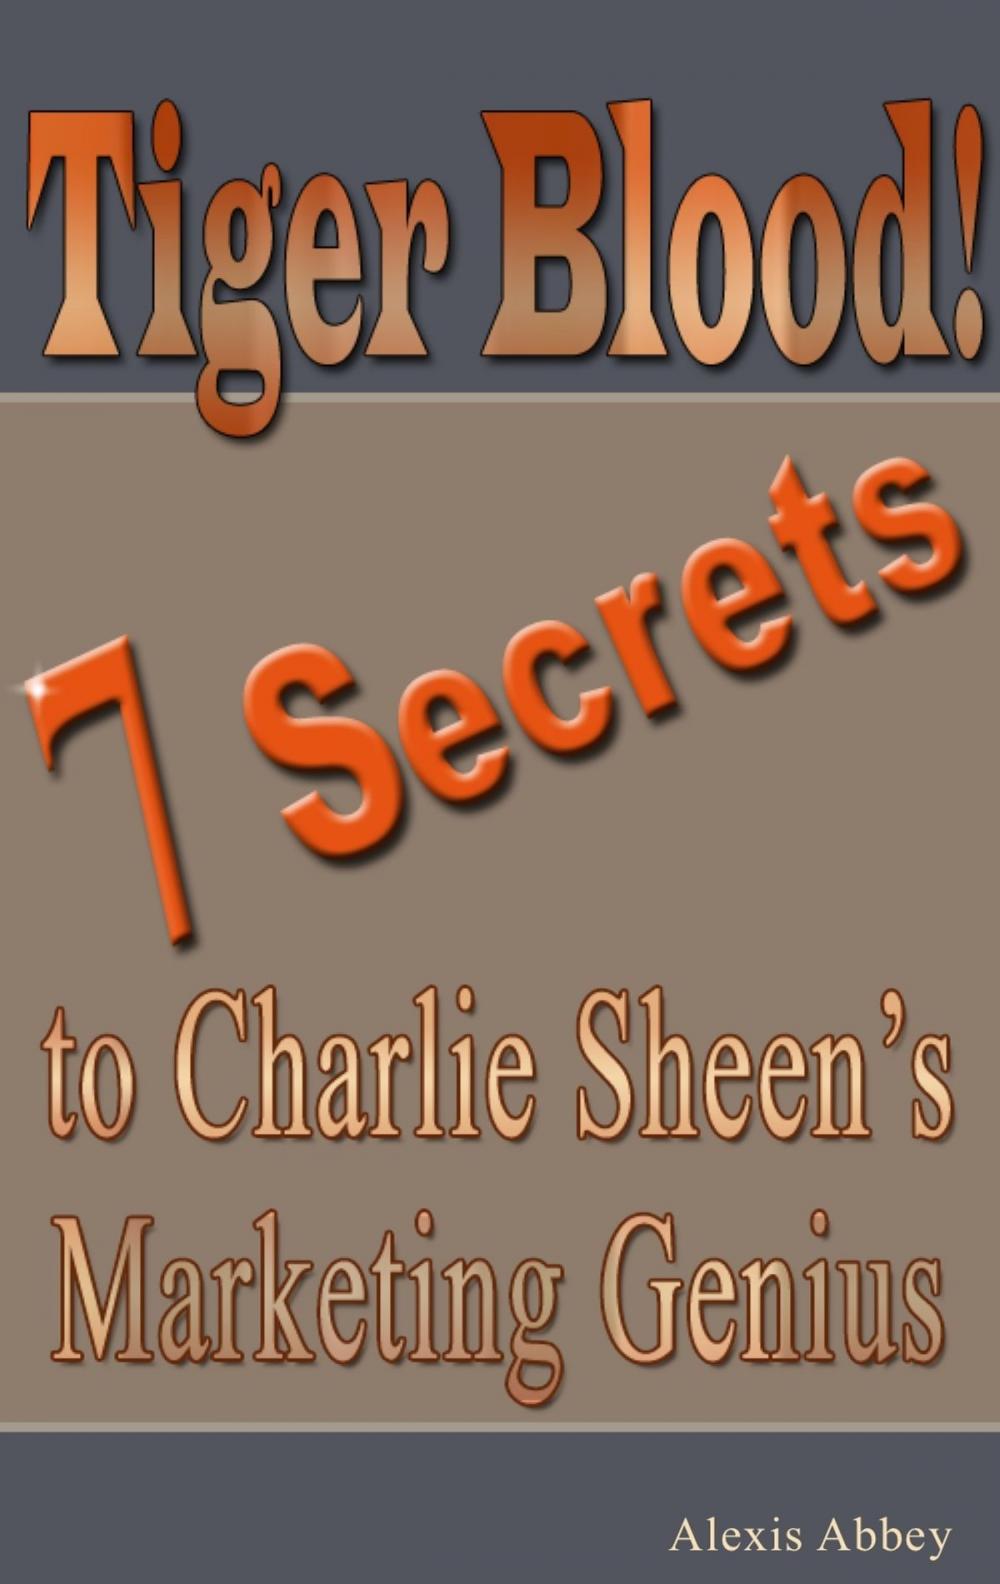 Big bigCover of Tiger Blood! 7 Secrets to Charlie Sheen's Marketing Genius